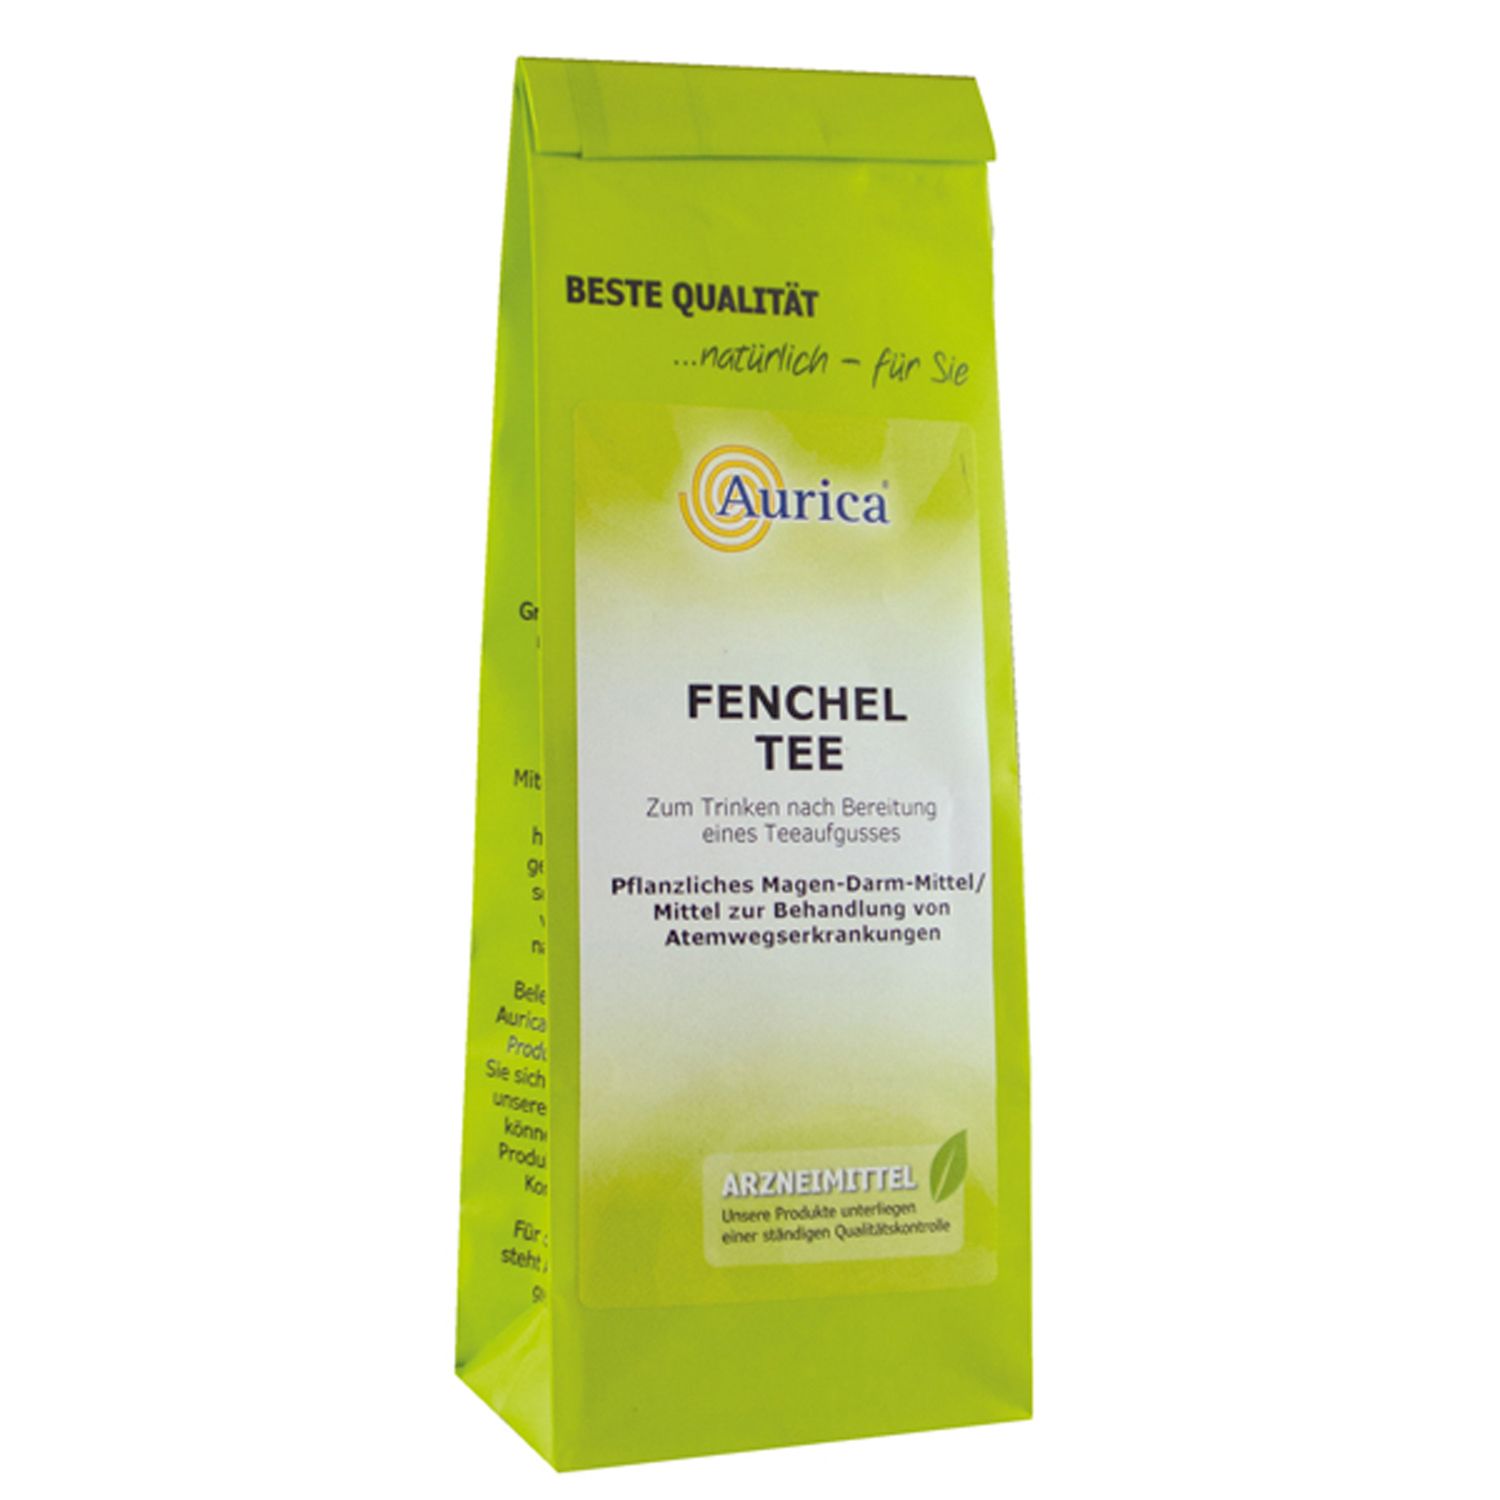 Aurica® Fenchel Tee